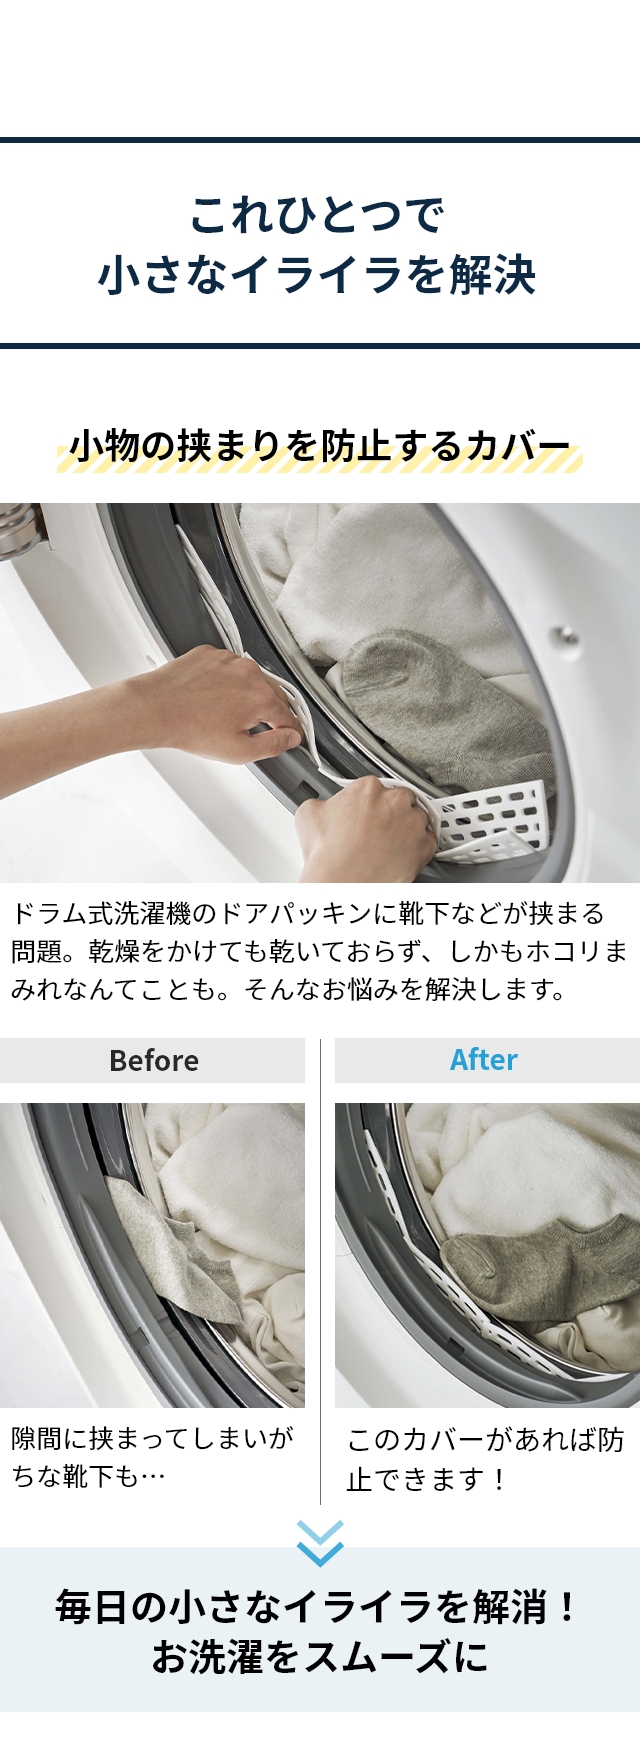 Plate (プレート) ドラム式洗濯機ドアパッキン小物挟まり防止カバー